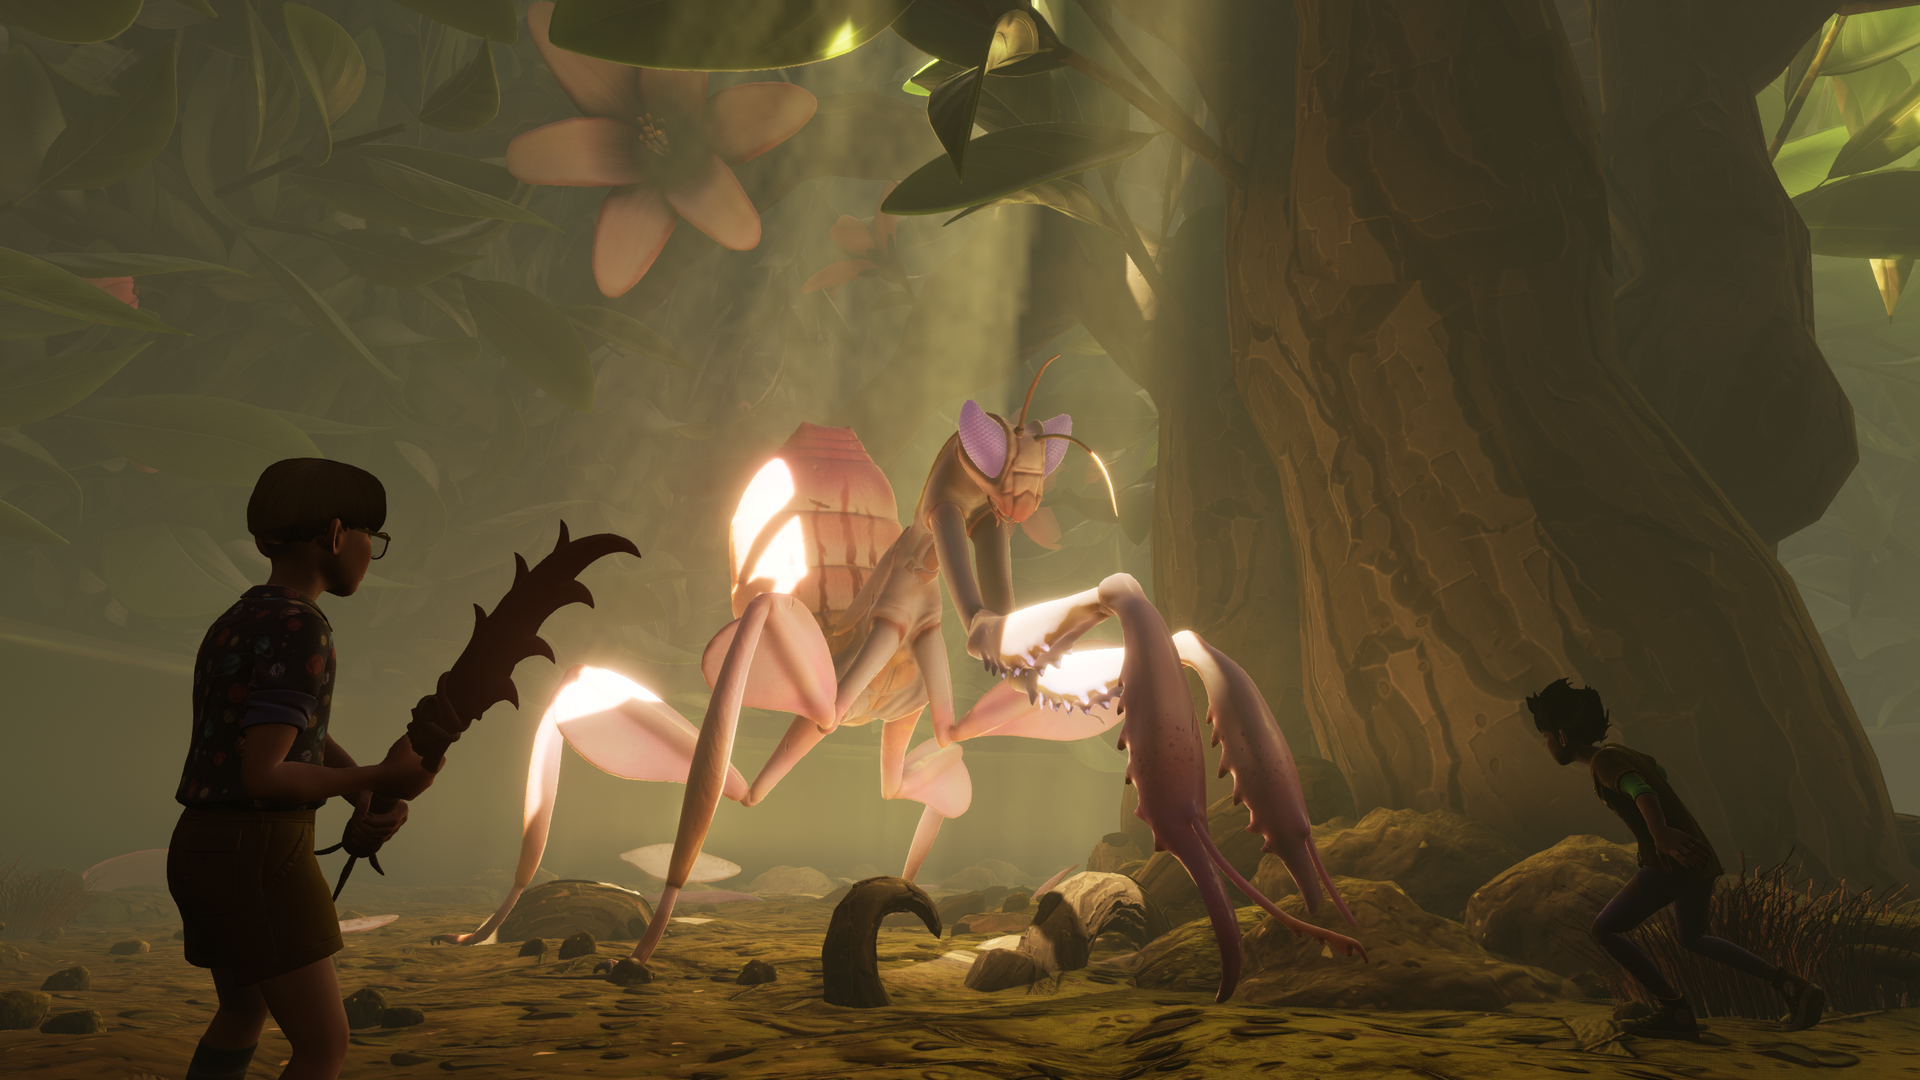 Video game screenshot of two people, shrunk to ant size, encountering a praying mantis